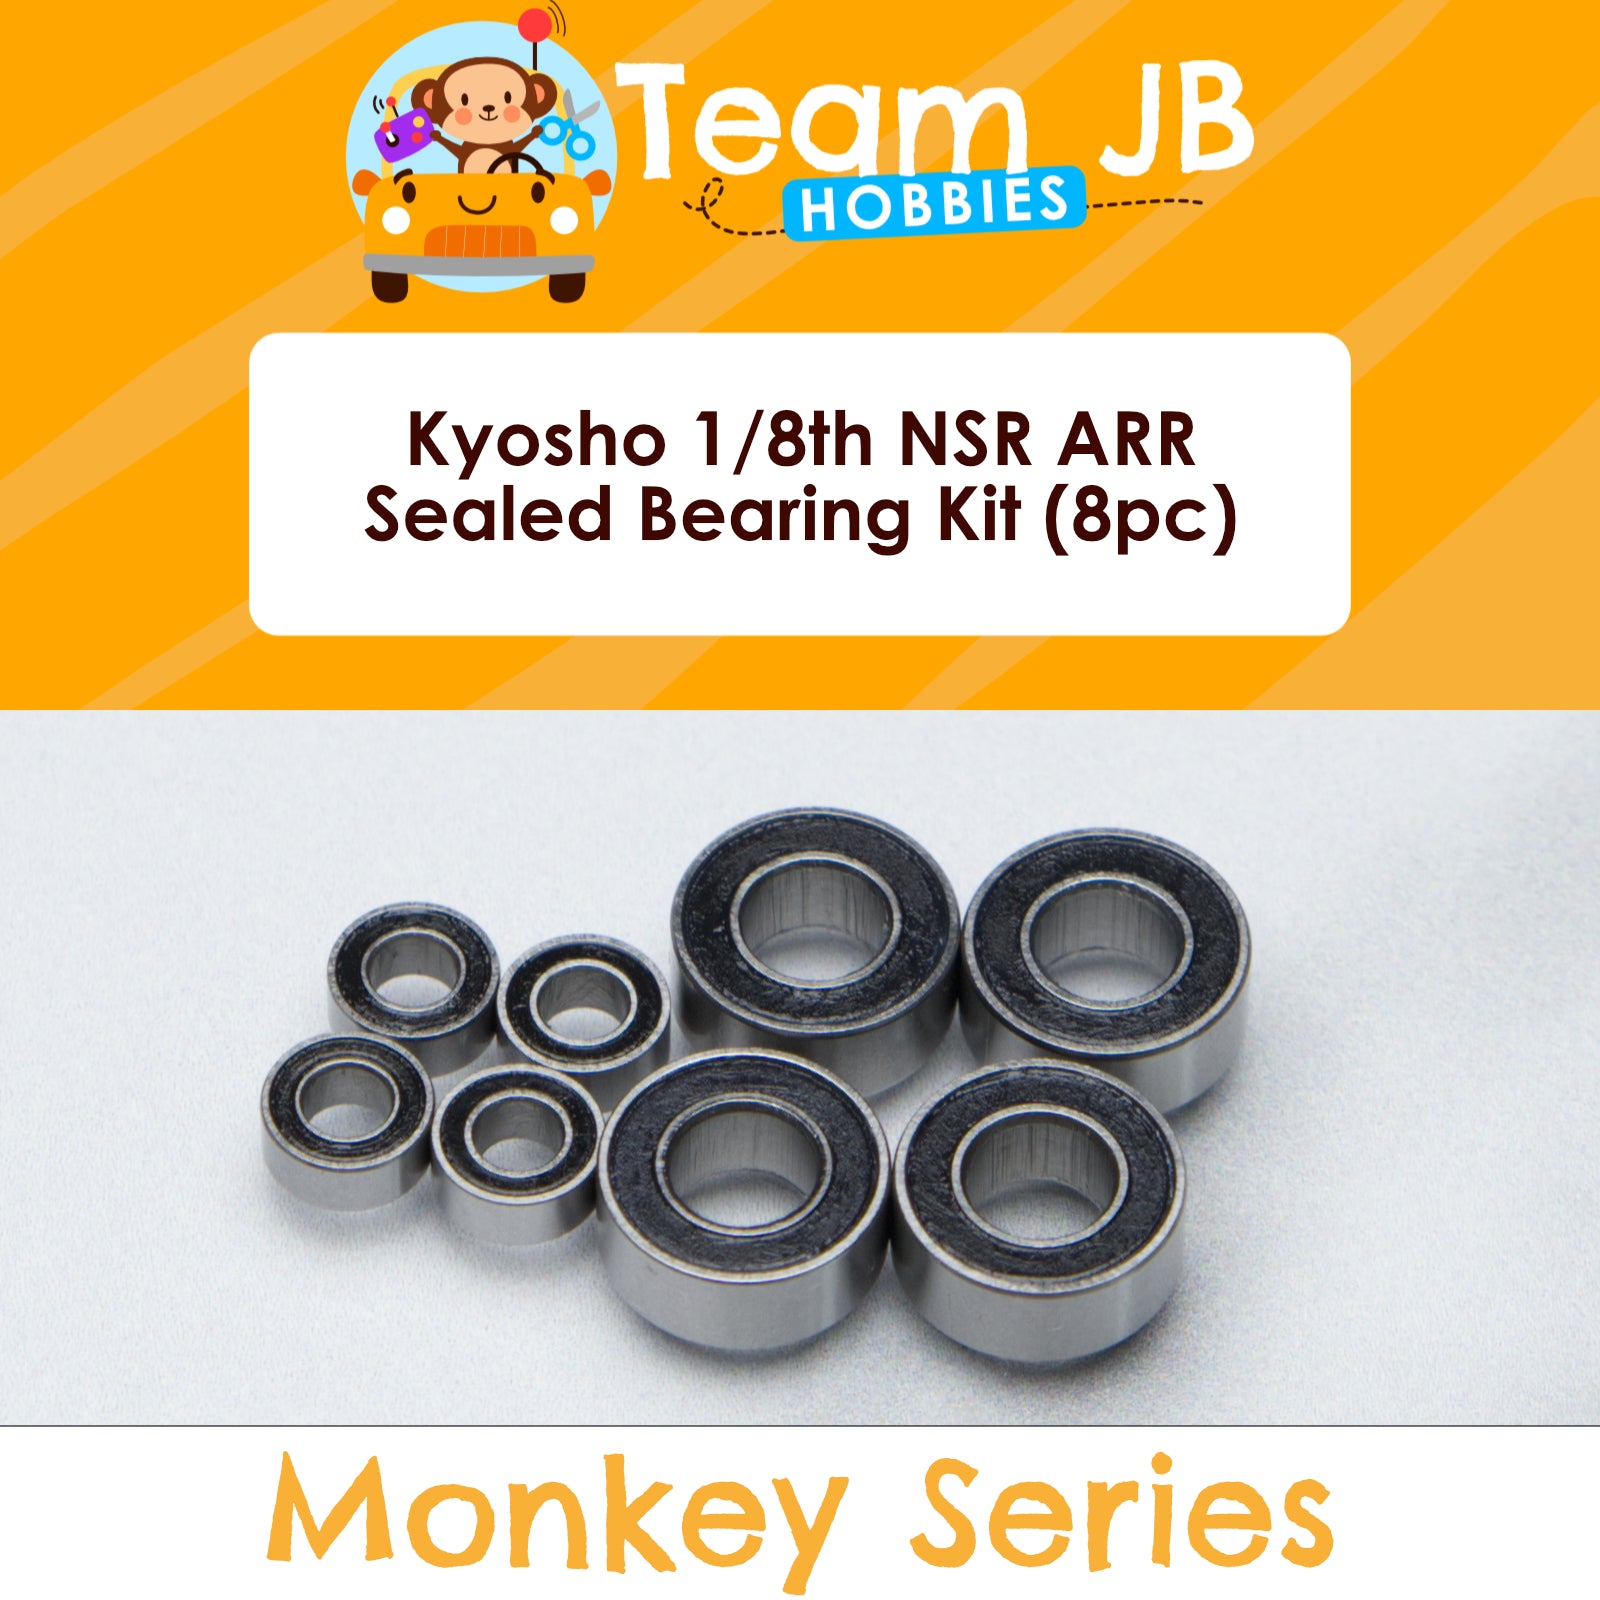 Kyosho 1/8th NSR ARR - Sealed Bearing Kit